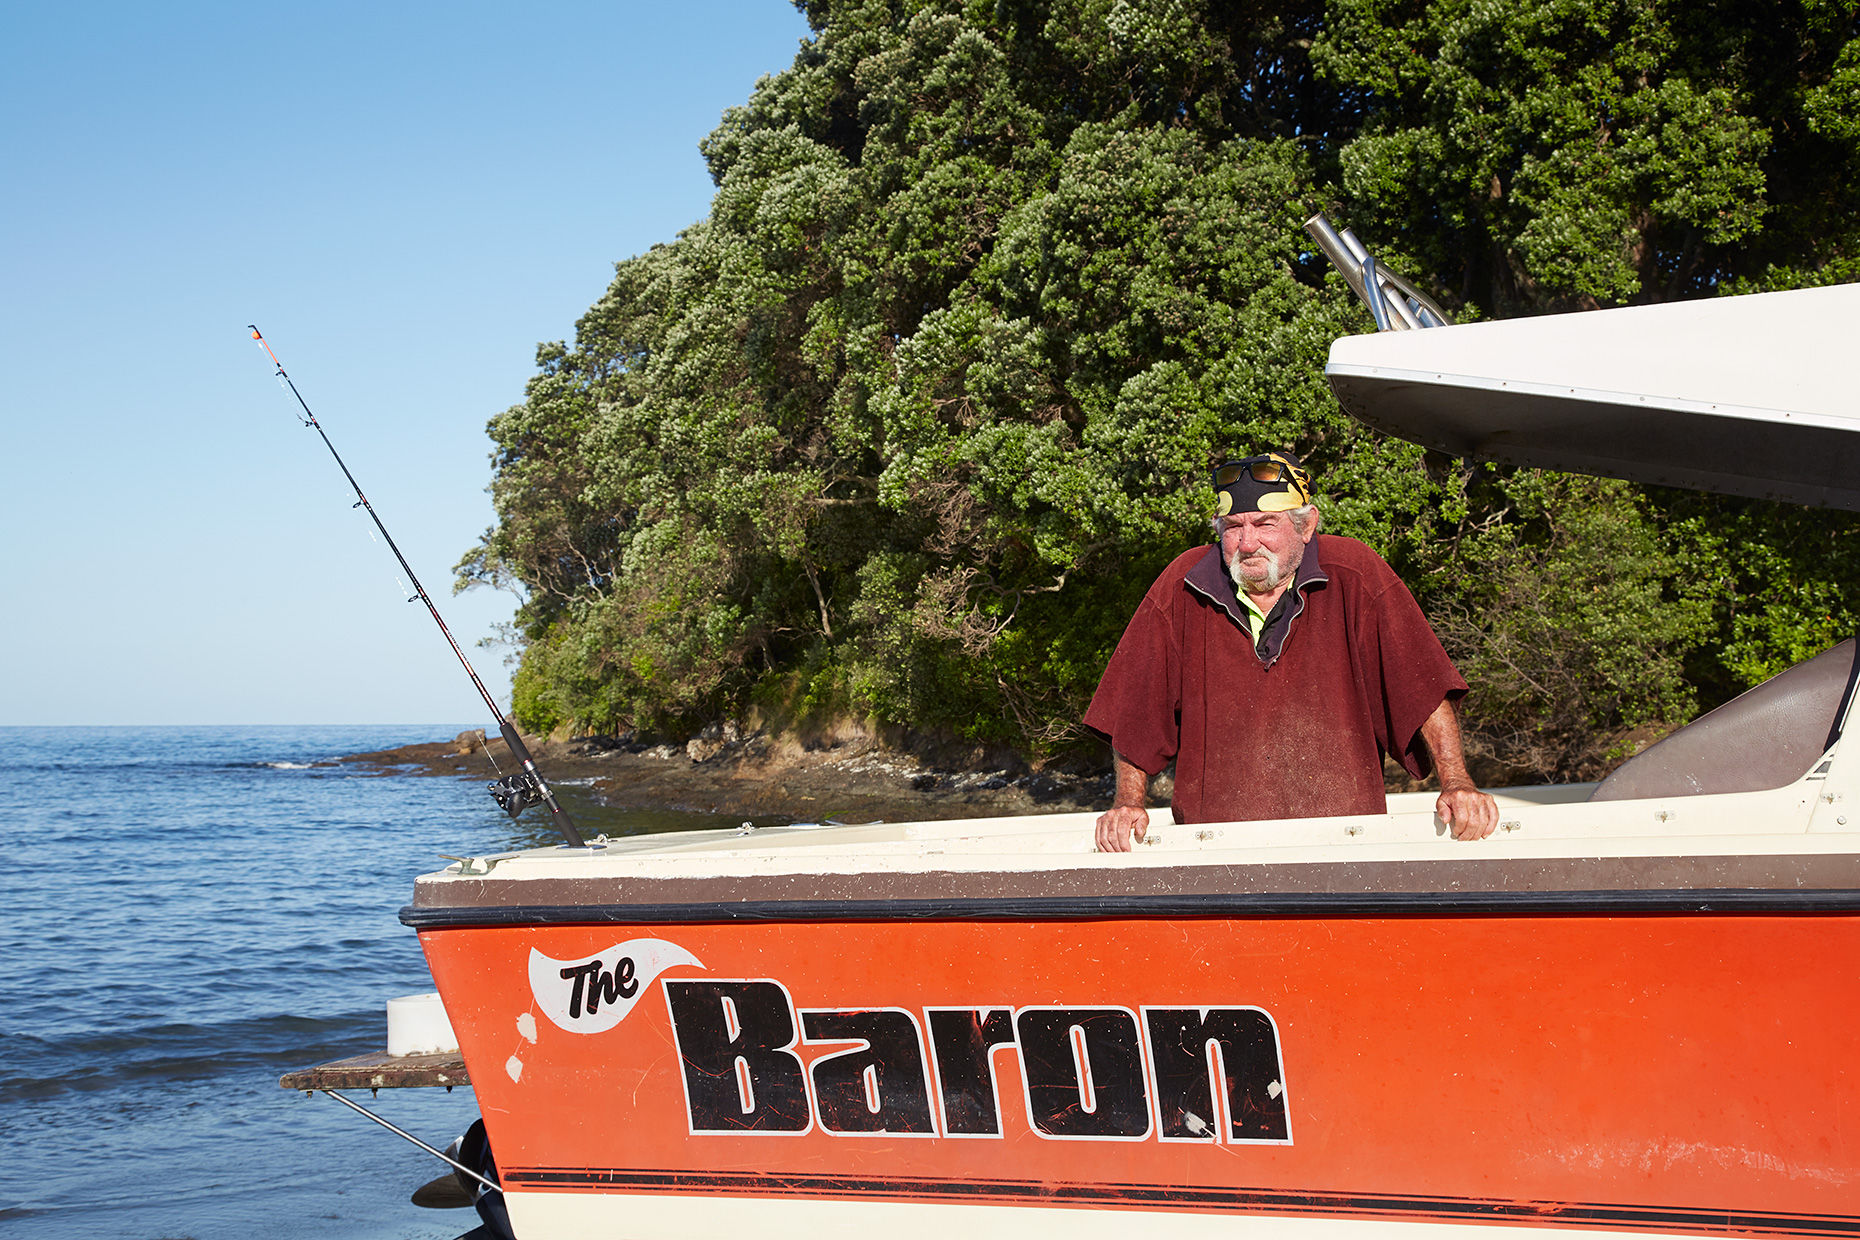 Man in boat, Te Kaha, New Zealand, 2020